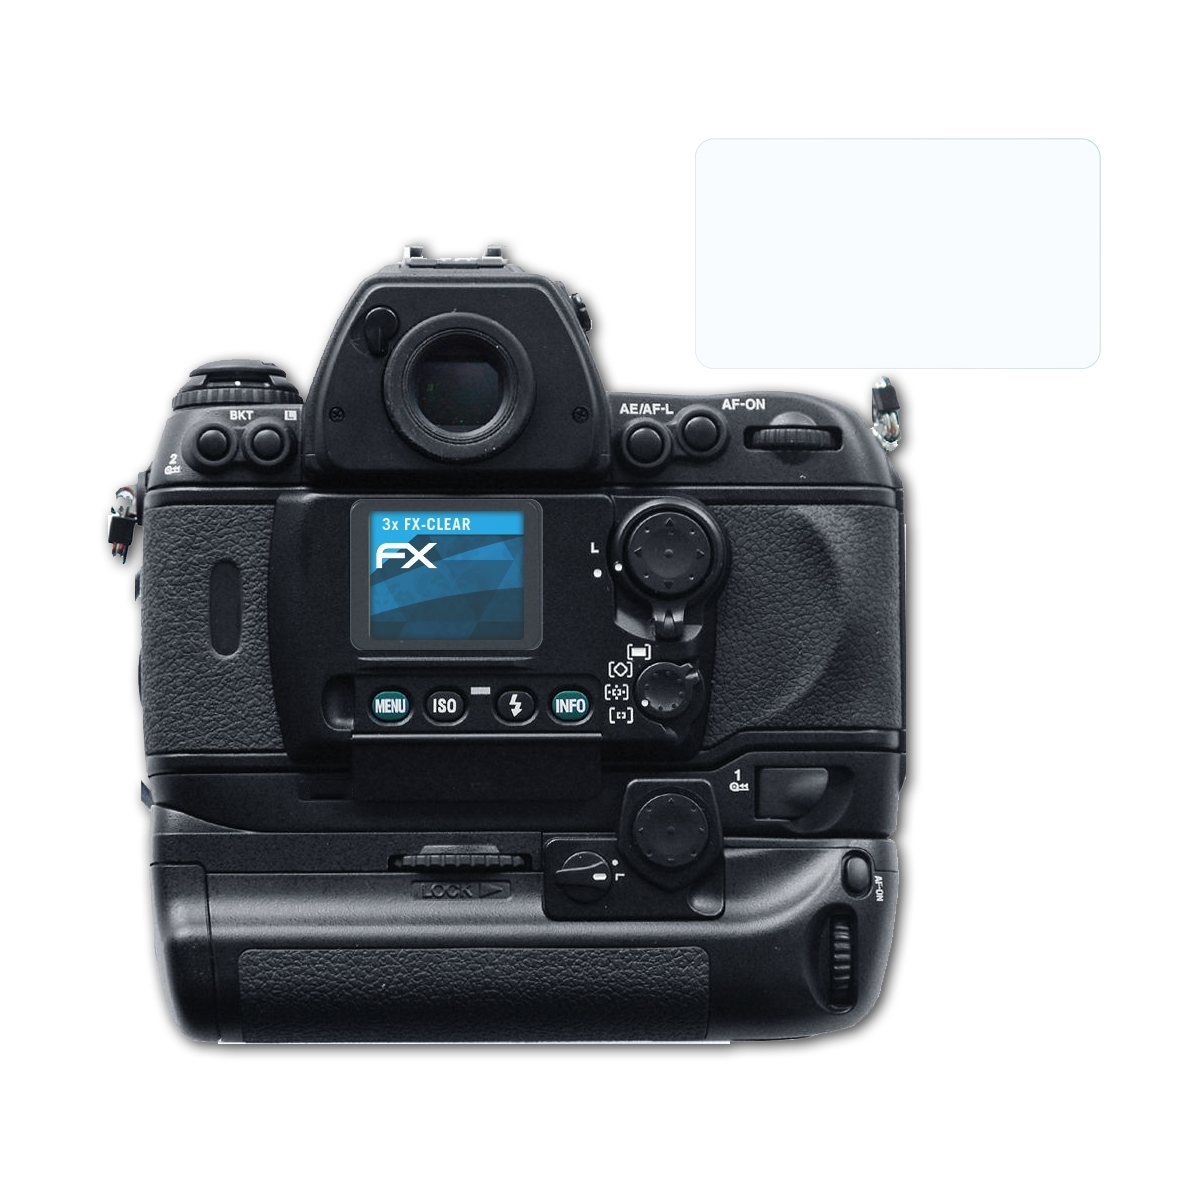 3x FX-Clear Nikon Displayschutz(für F6) ATFOLIX